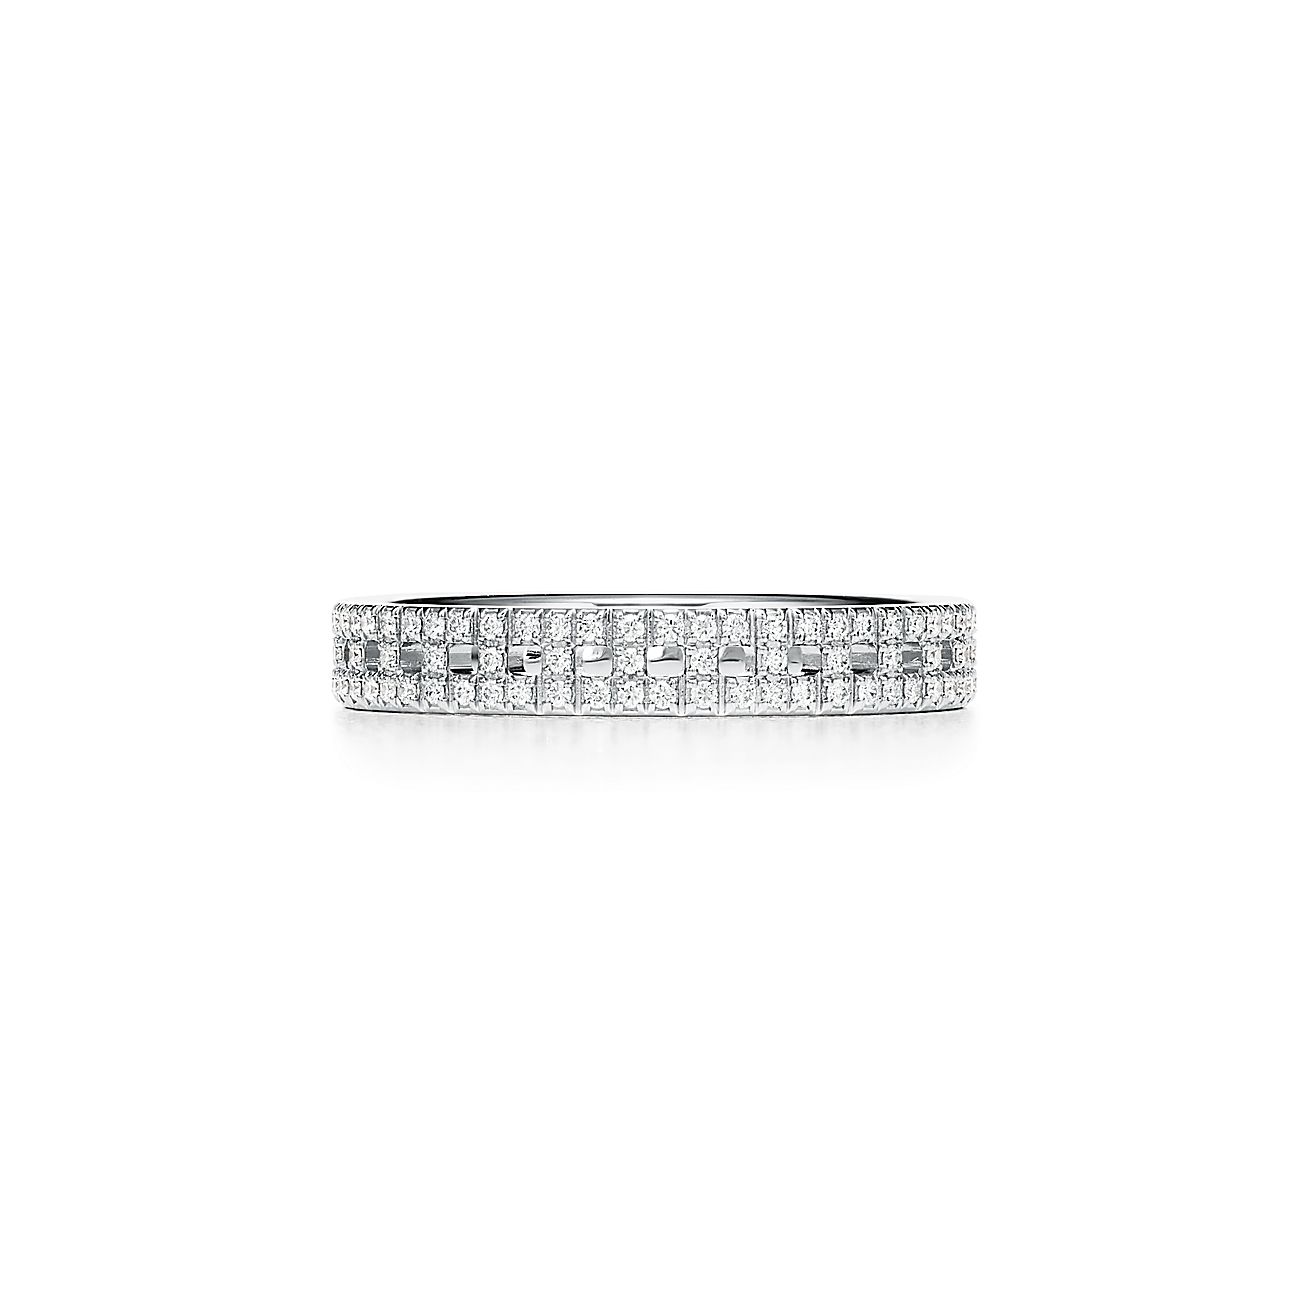 Weggooien bom vals Tiffany T True narrow ring in 18k white gold with pavé diamonds, 3.5 mm  wide. | Tiffany & Co.